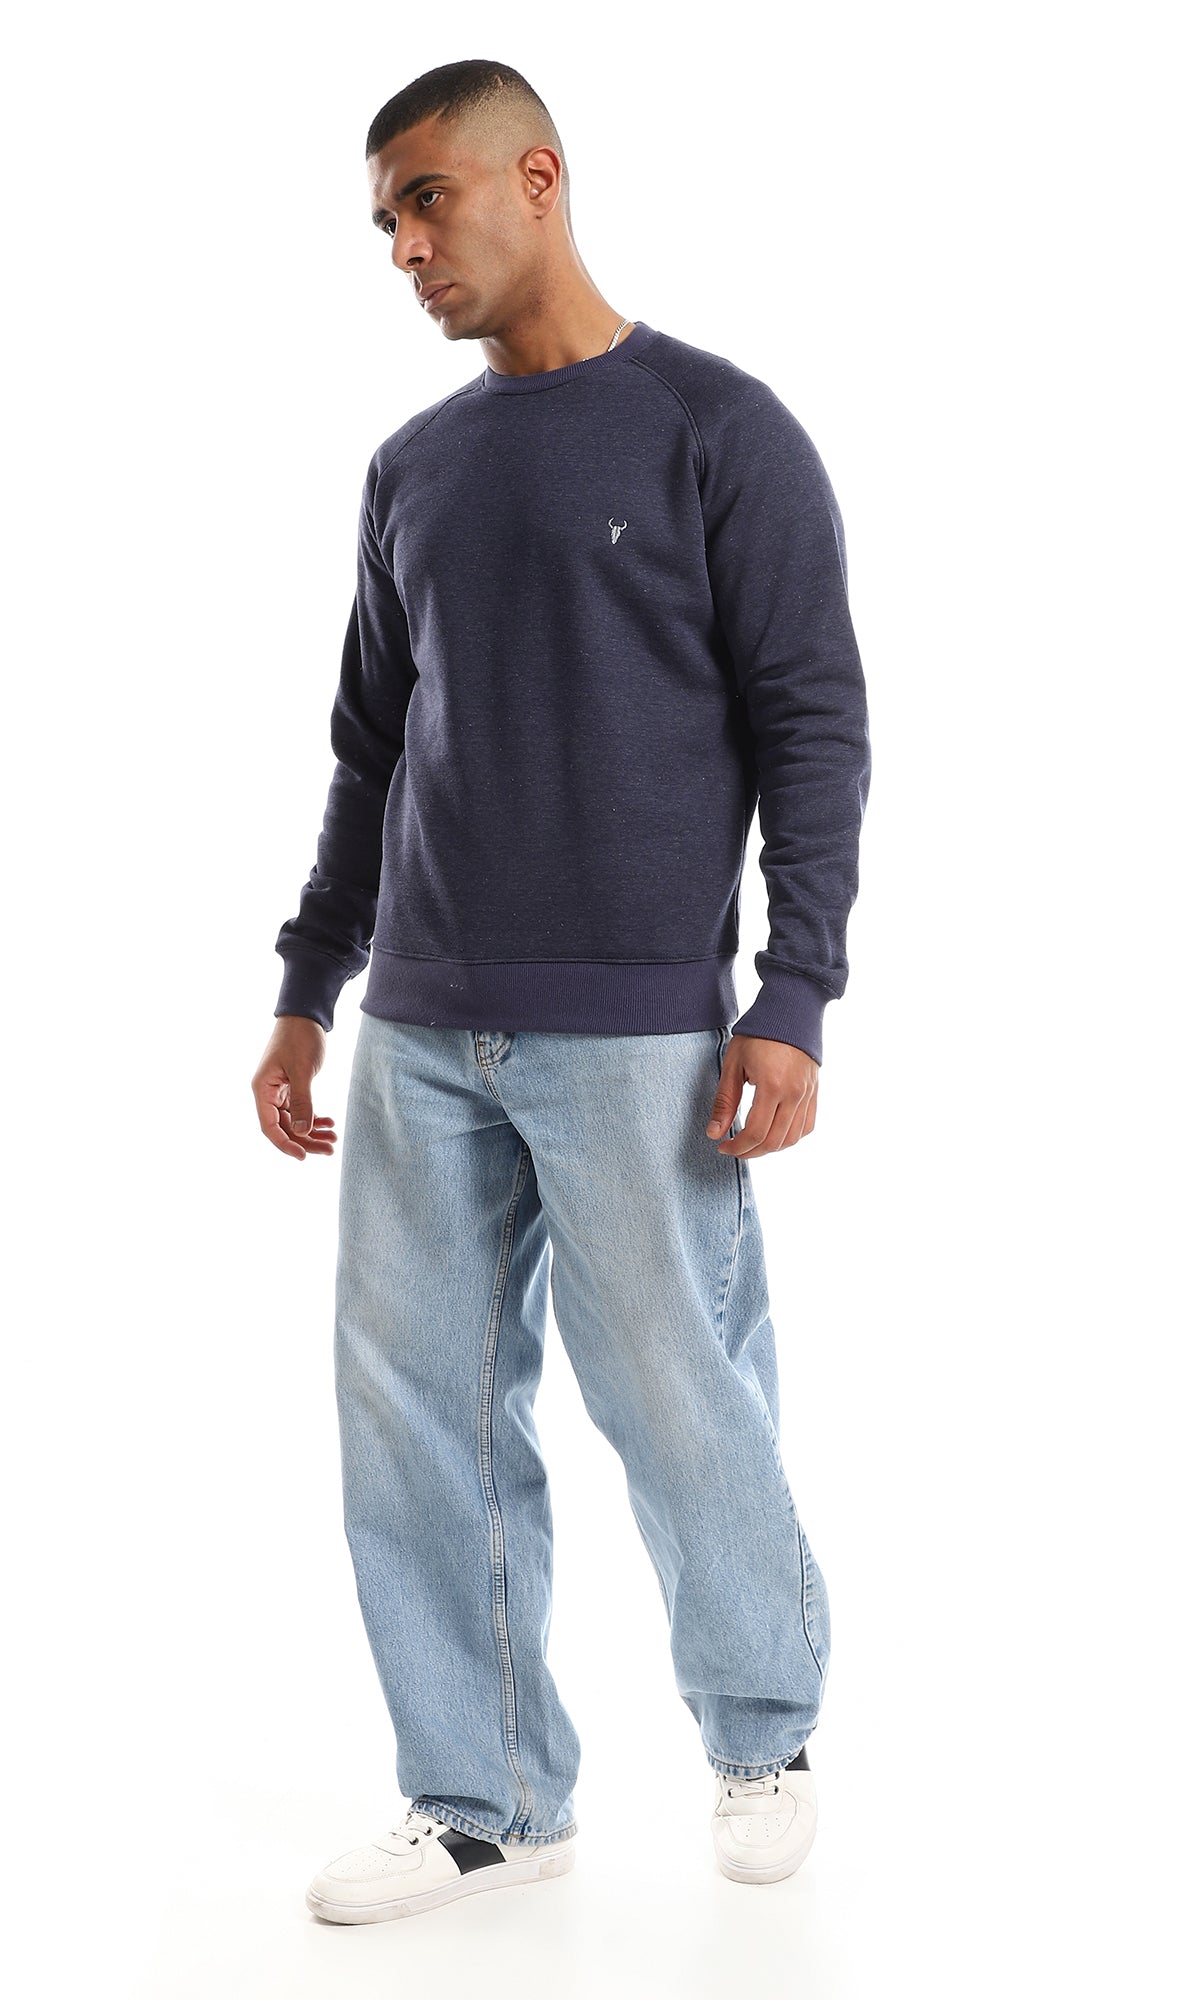 O152800 Hips Length Long Sleeves Heather Navy Blue Sweatshirt